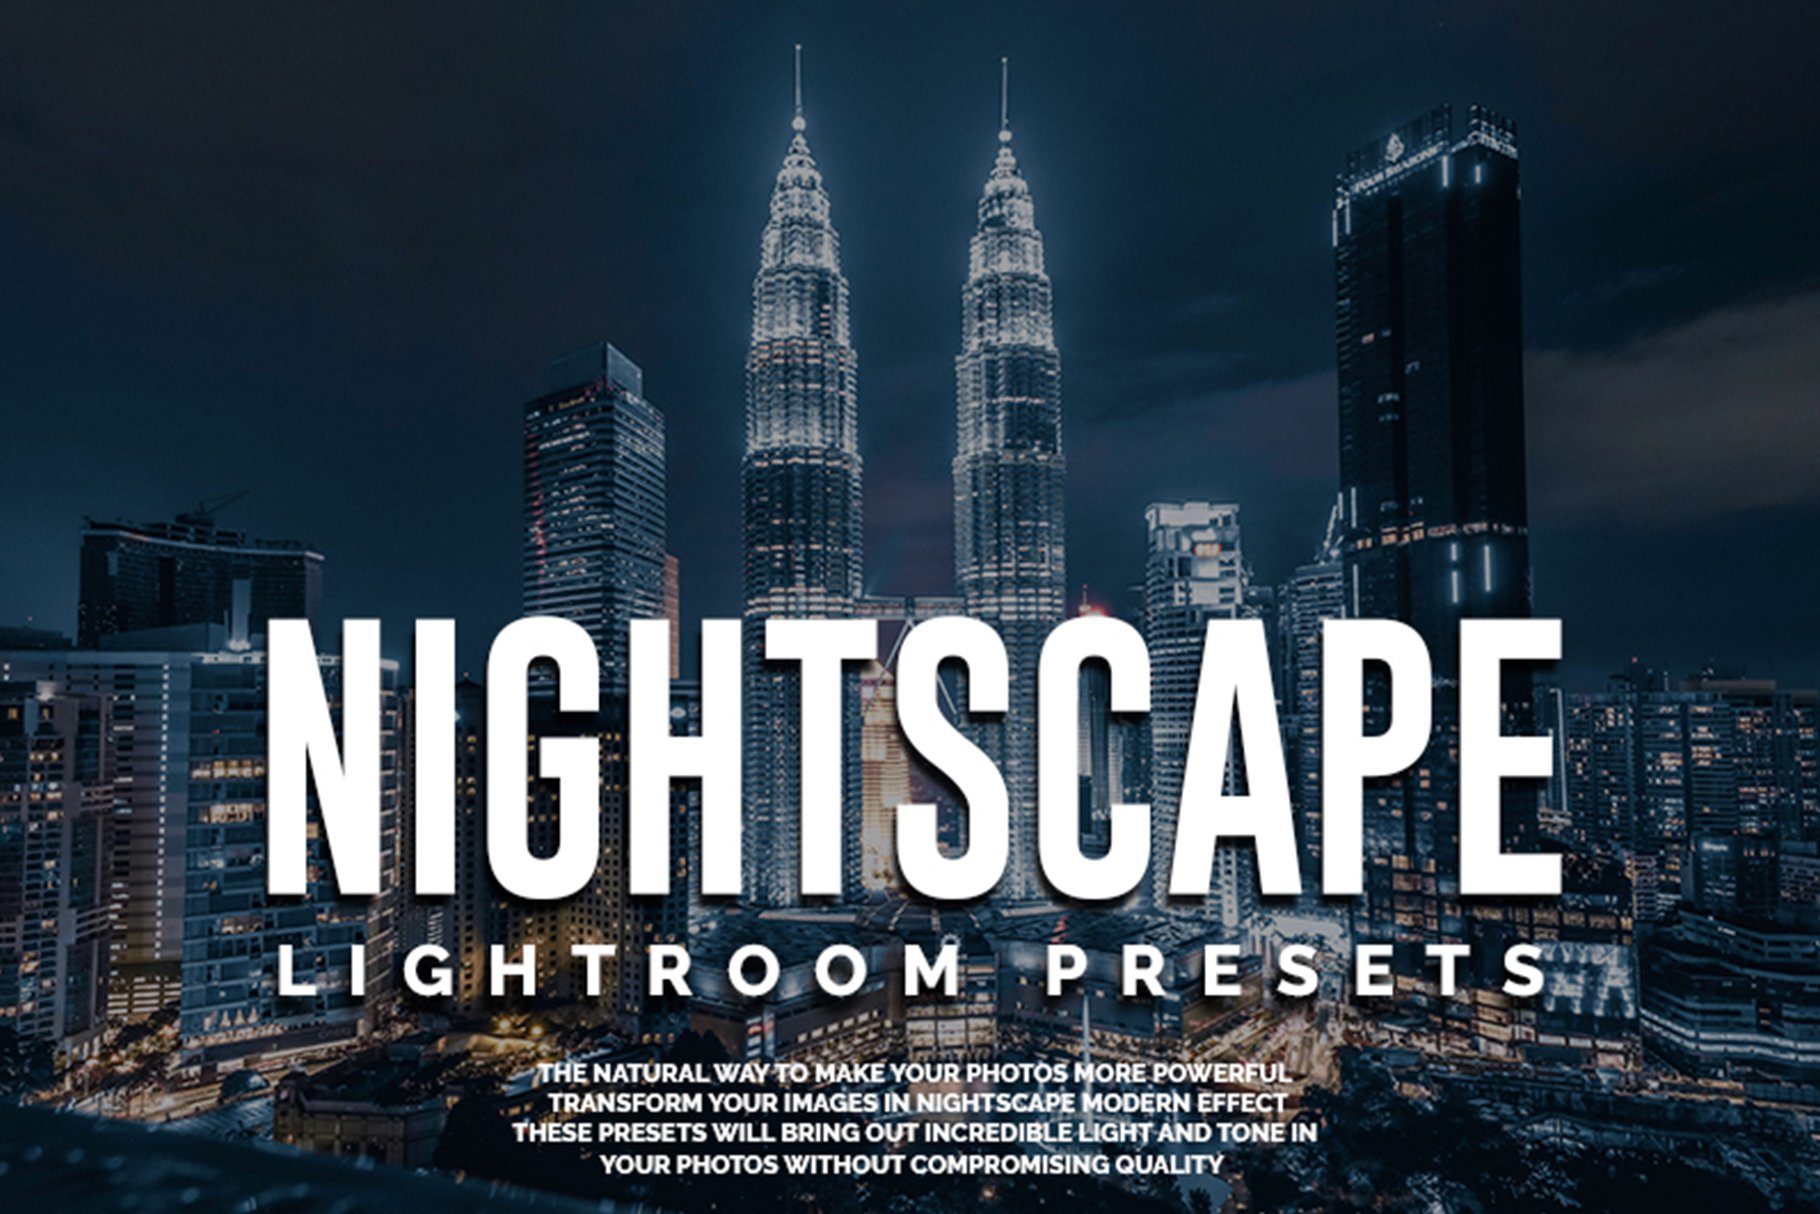 Nightscape Lightroom Presetscover image.